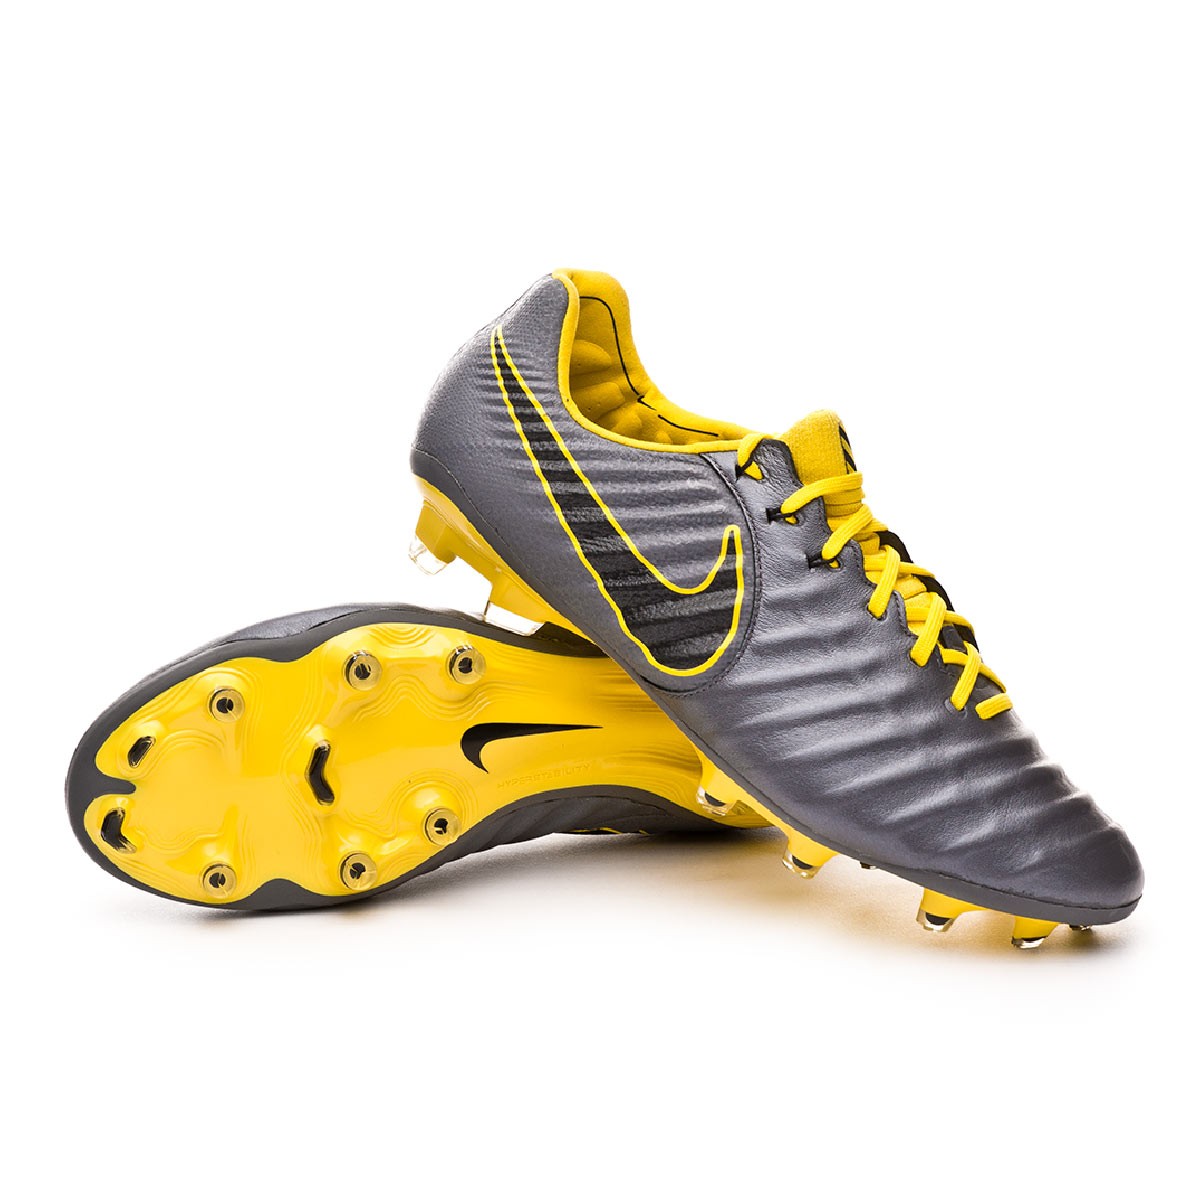 Bota de fútbol Nike Tiempo Legend VII Elite FG Dark grey-Optical  yellow-Black - Tienda de fútbol Fútbol Emotion